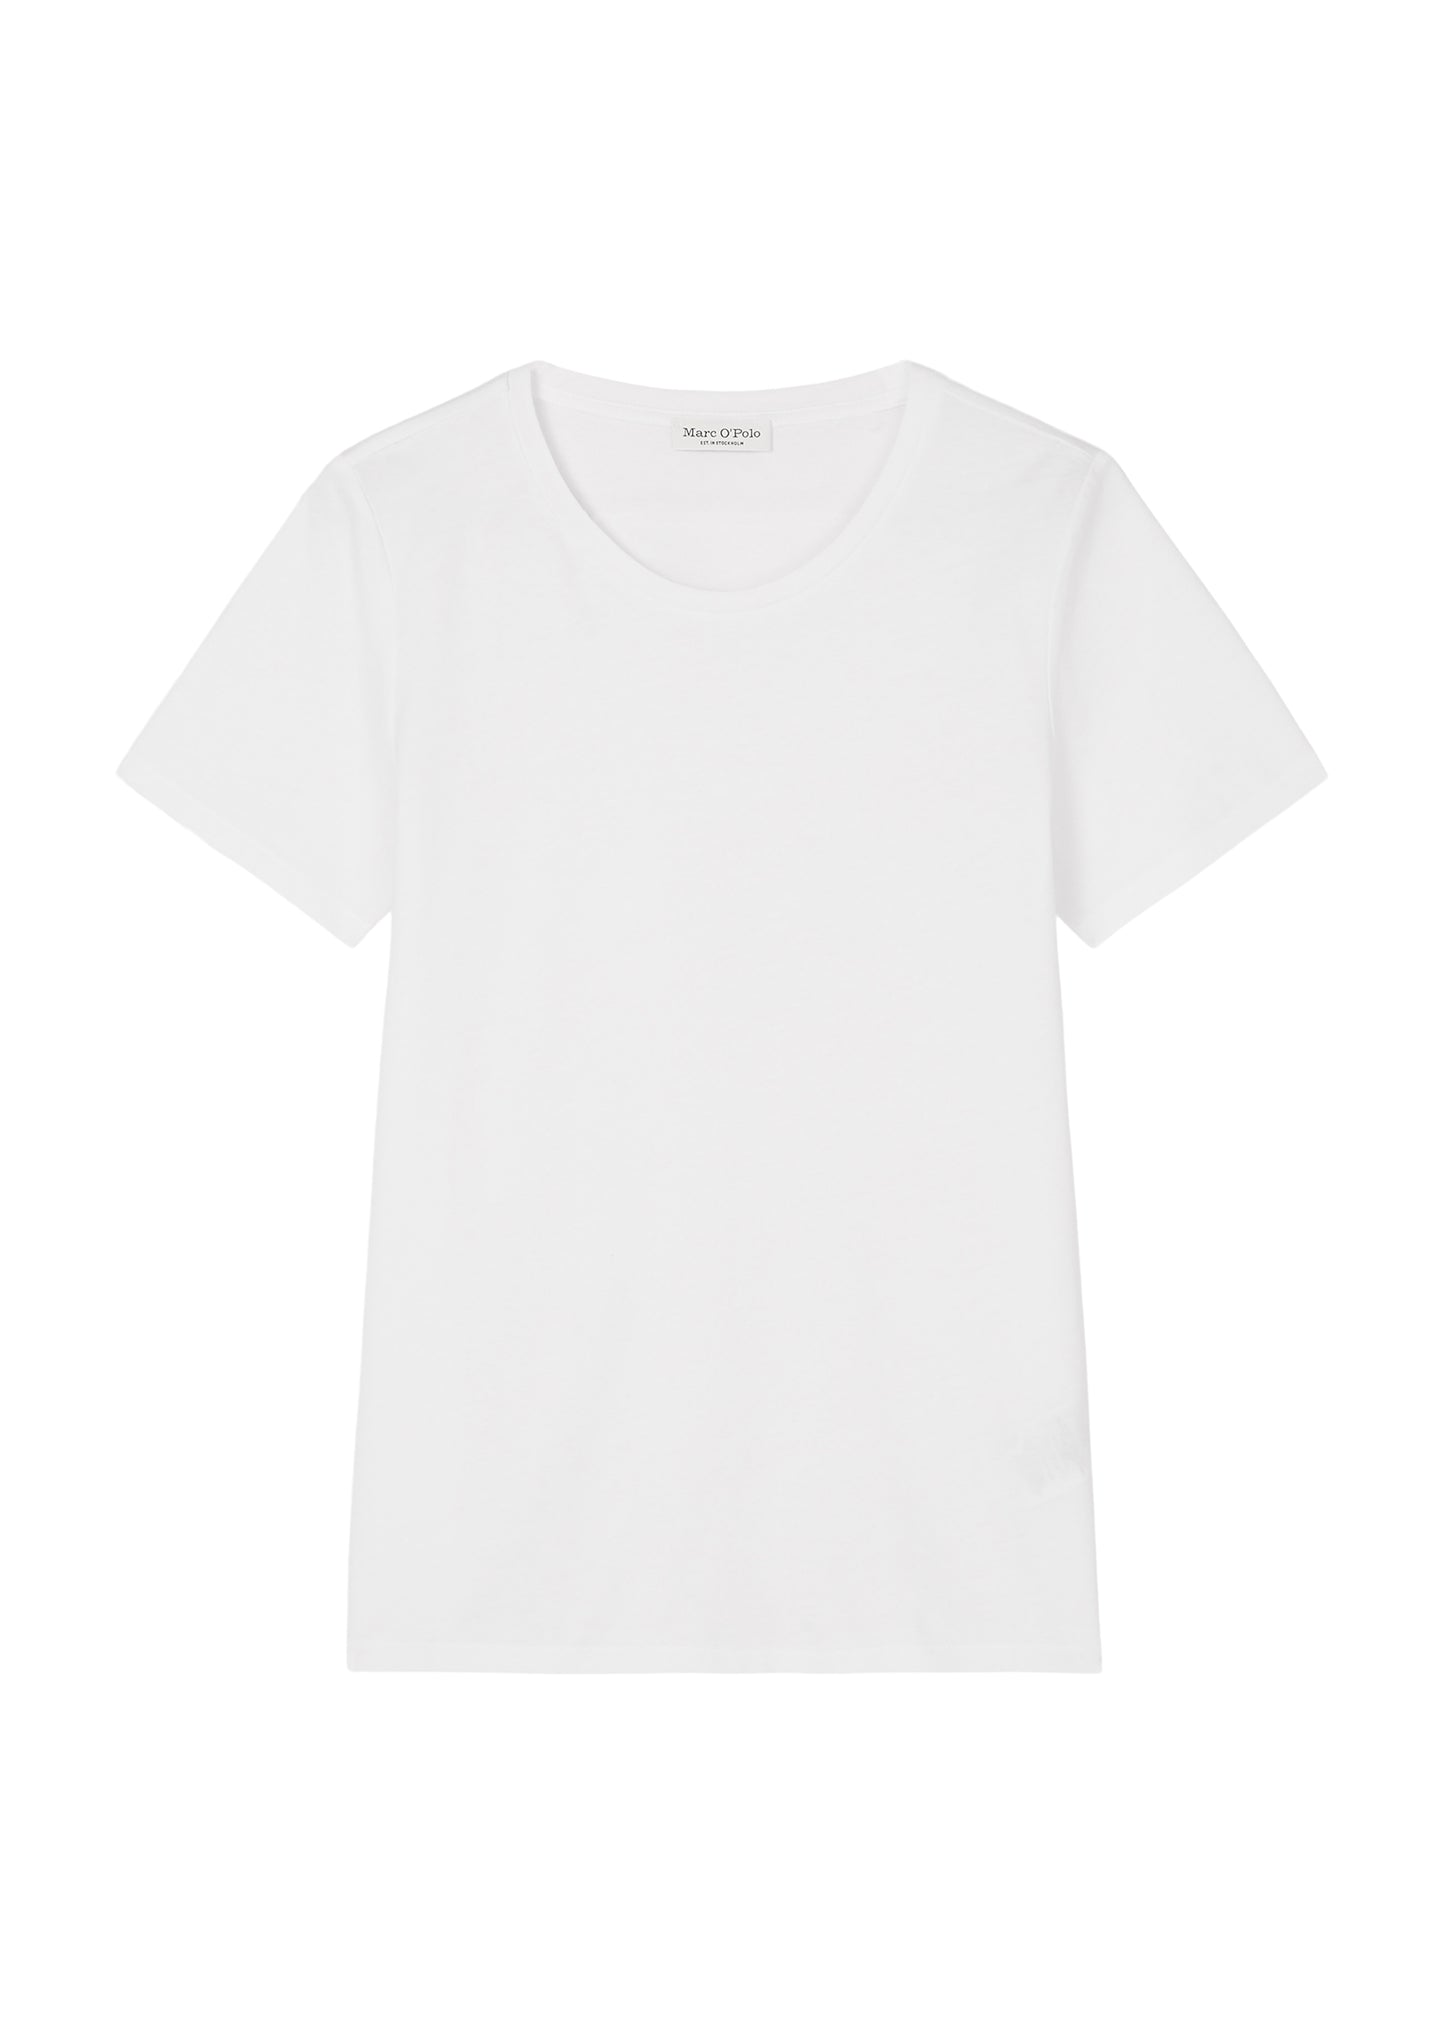 T-shirt, short sleeve, round neck - B01207251257